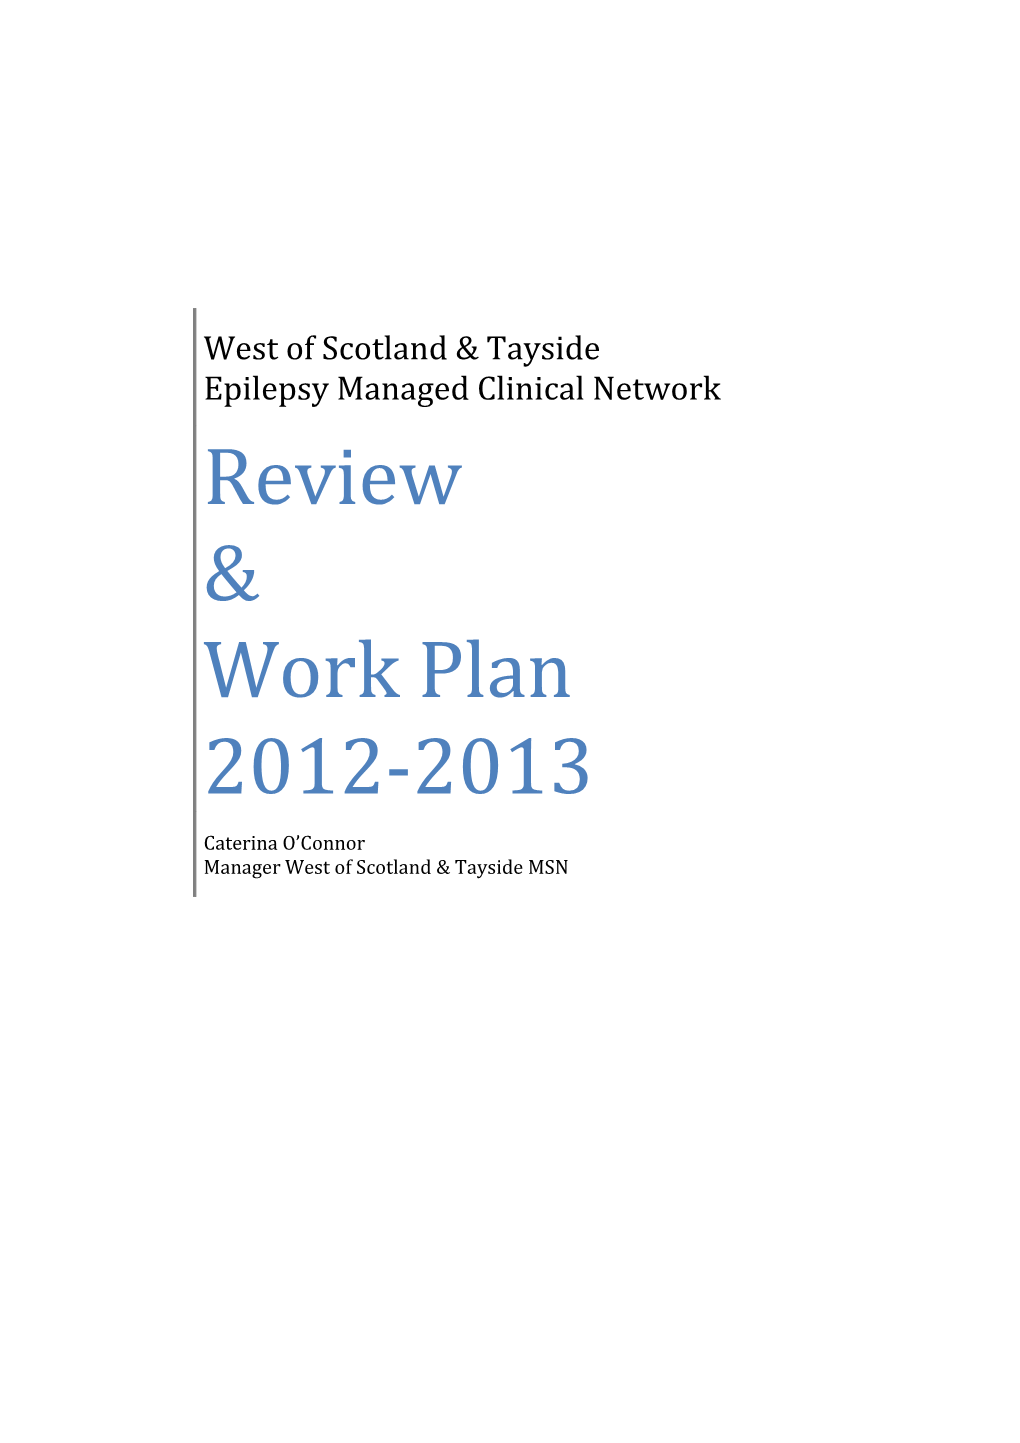 Review & Work Plan 2012-2013